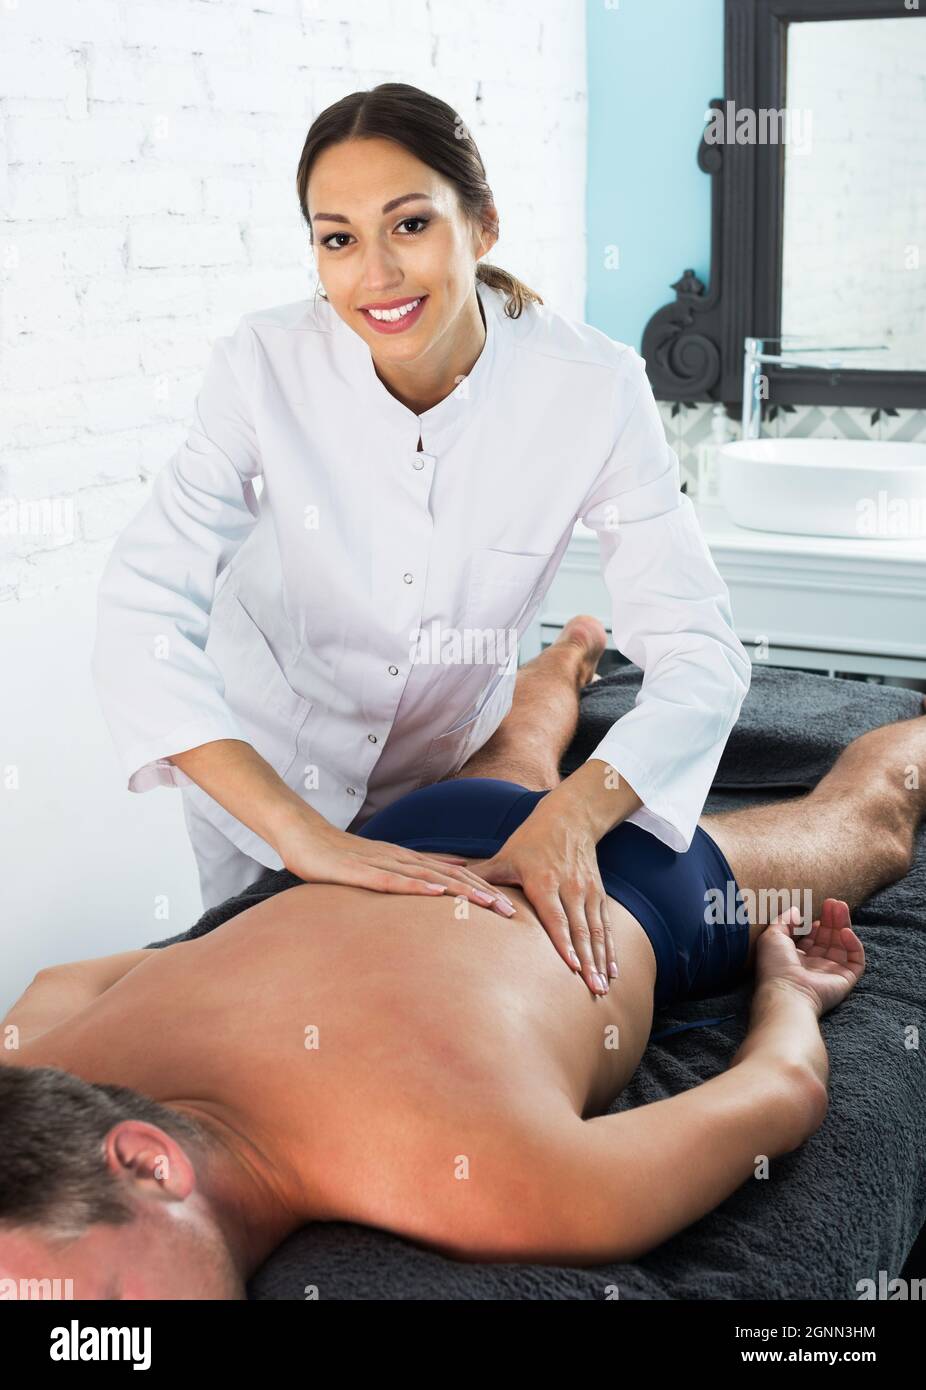 https://c8.alamy.com/comp/2GNN3HM/woman-masseur-working-in-spa-2GNN3HM.jpg